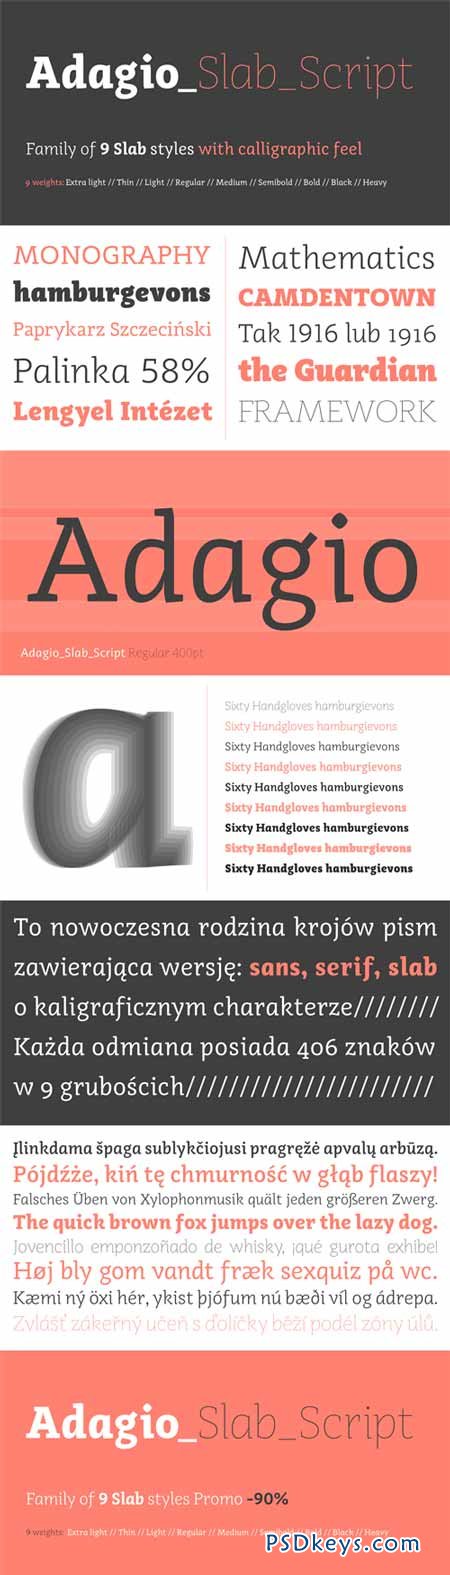 Adagio Slab Script Font Family - 9 Fonts for $140